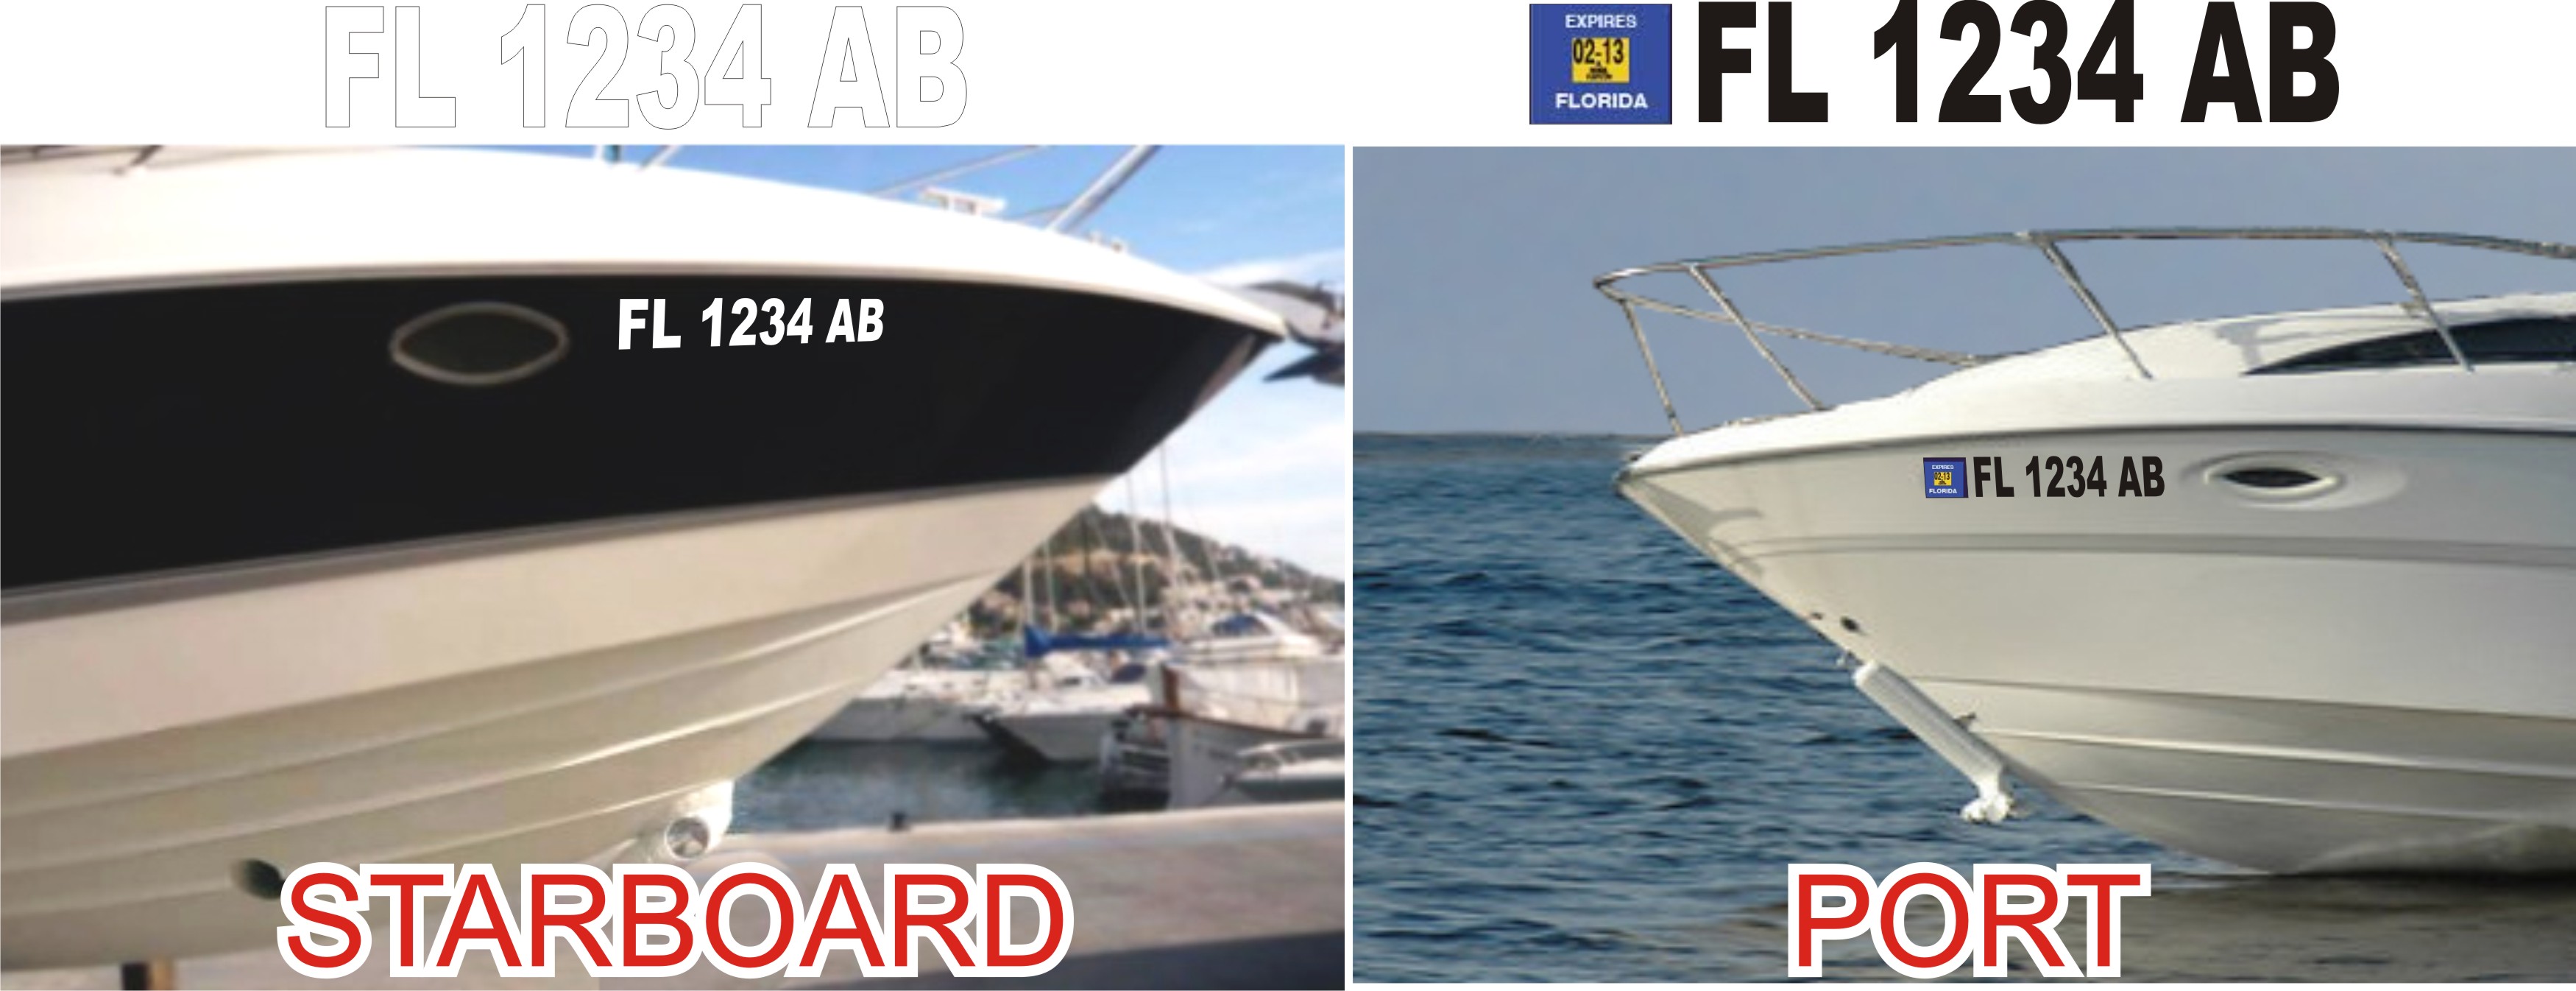 florida-registration-numbers-in-design-or-bold-block-letters-boat